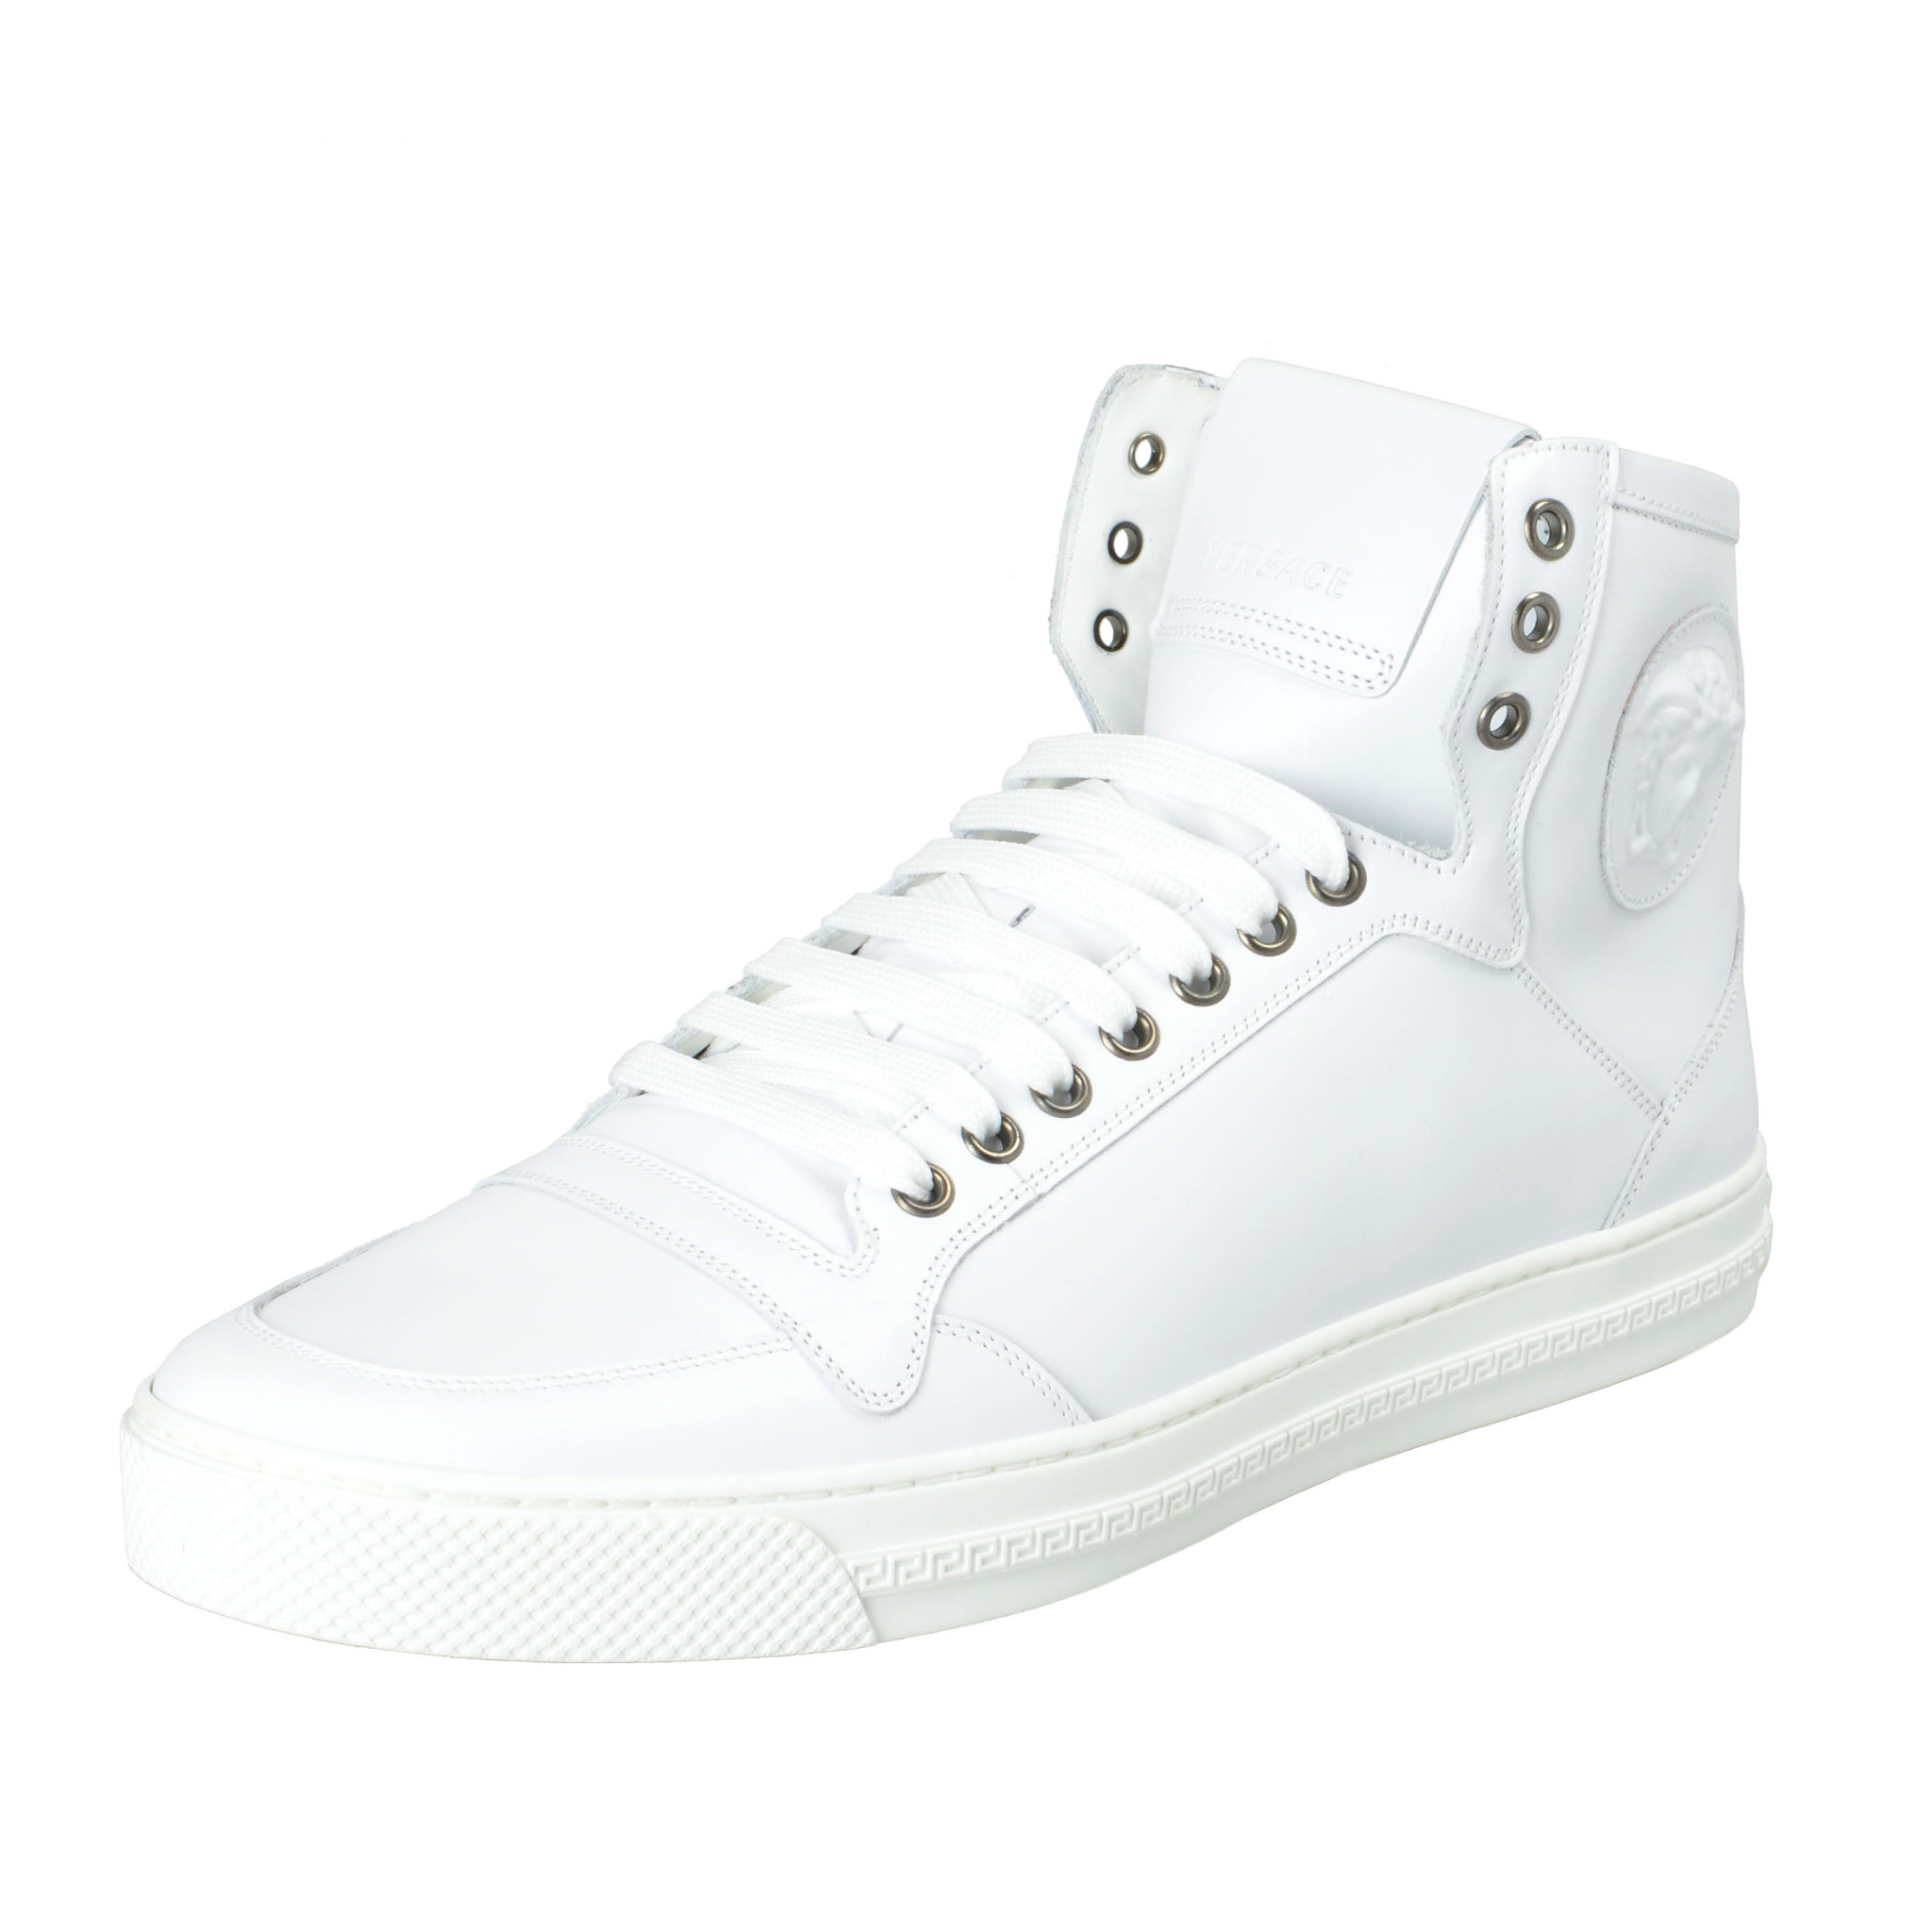 Versace Men's White Leather Medusa Hi Top Fashion Sneakers Shoes Sz 8 ...